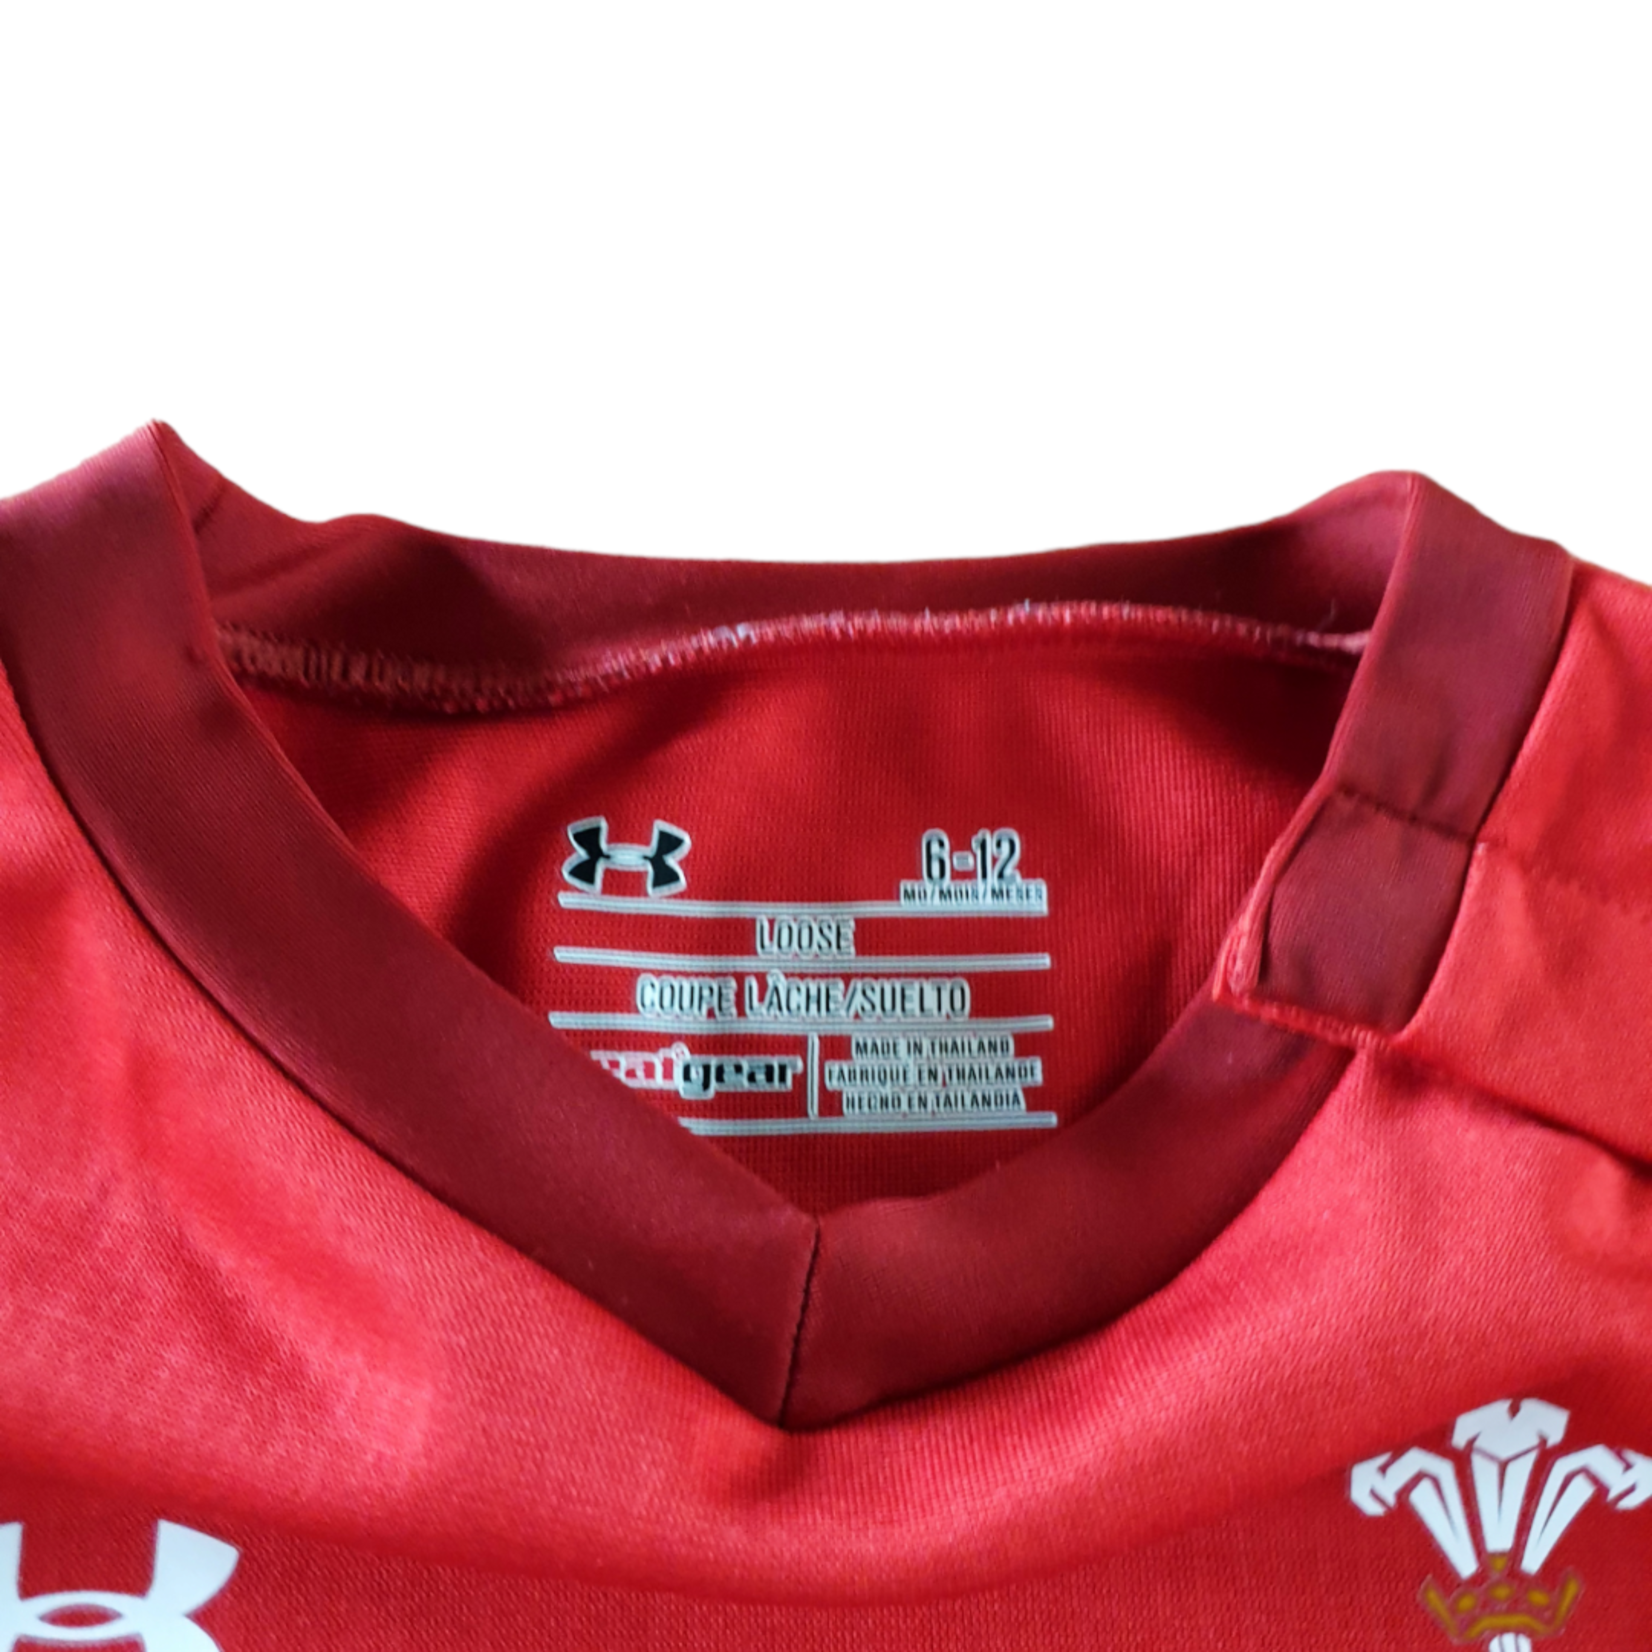 Under Armour Origineel Under Armour rugbyshirt WRU Wales 2015/16